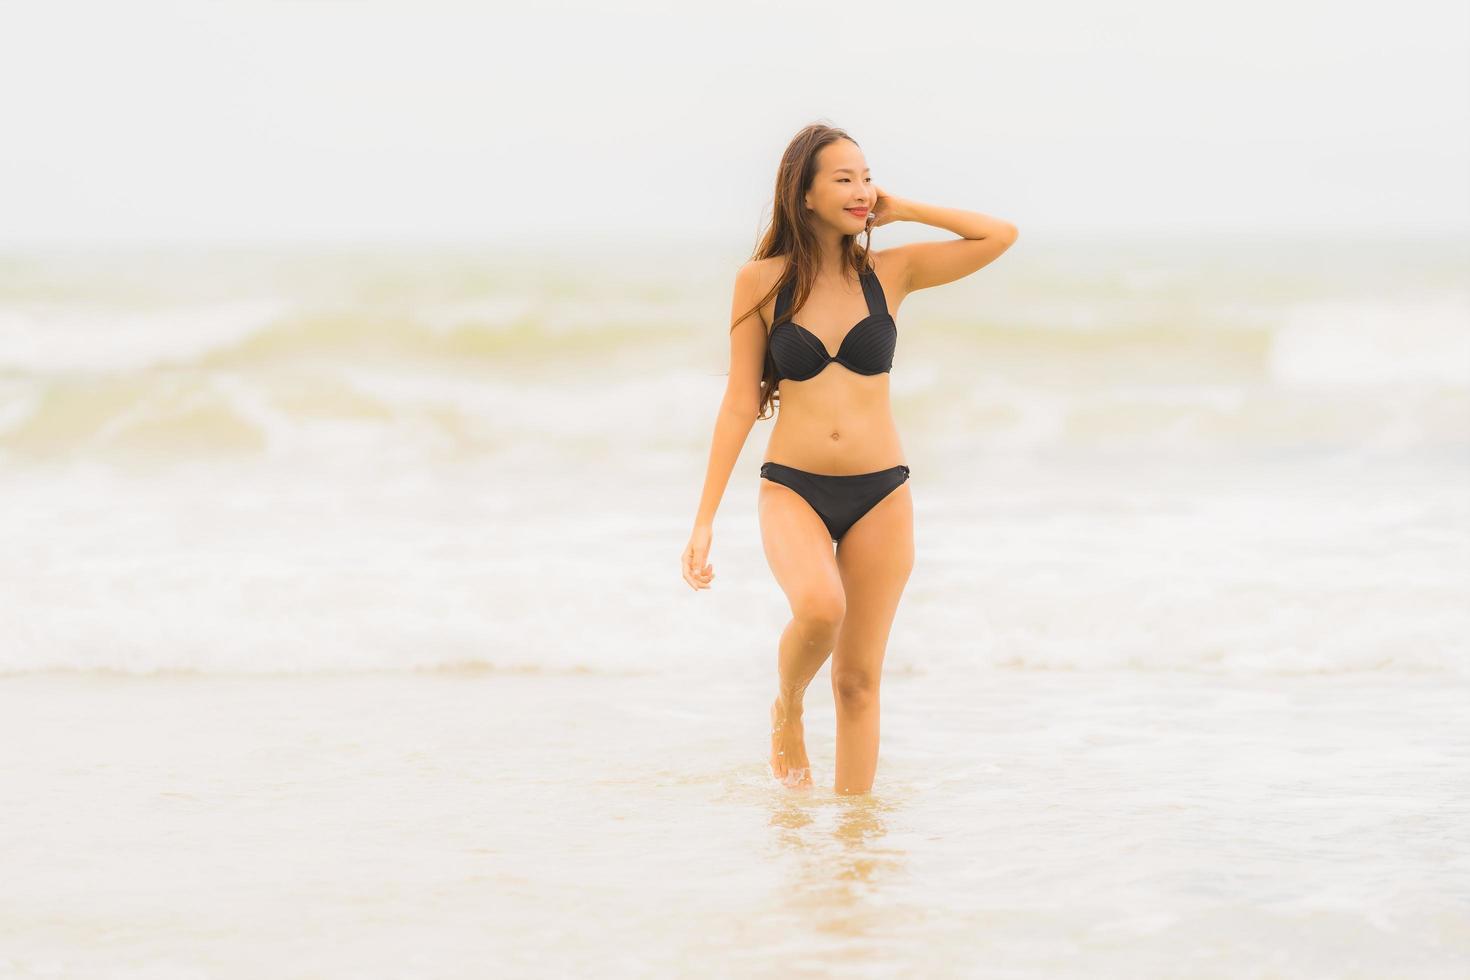 retrato linda jovem asiática usar biquíni na praia, mar, oceano foto